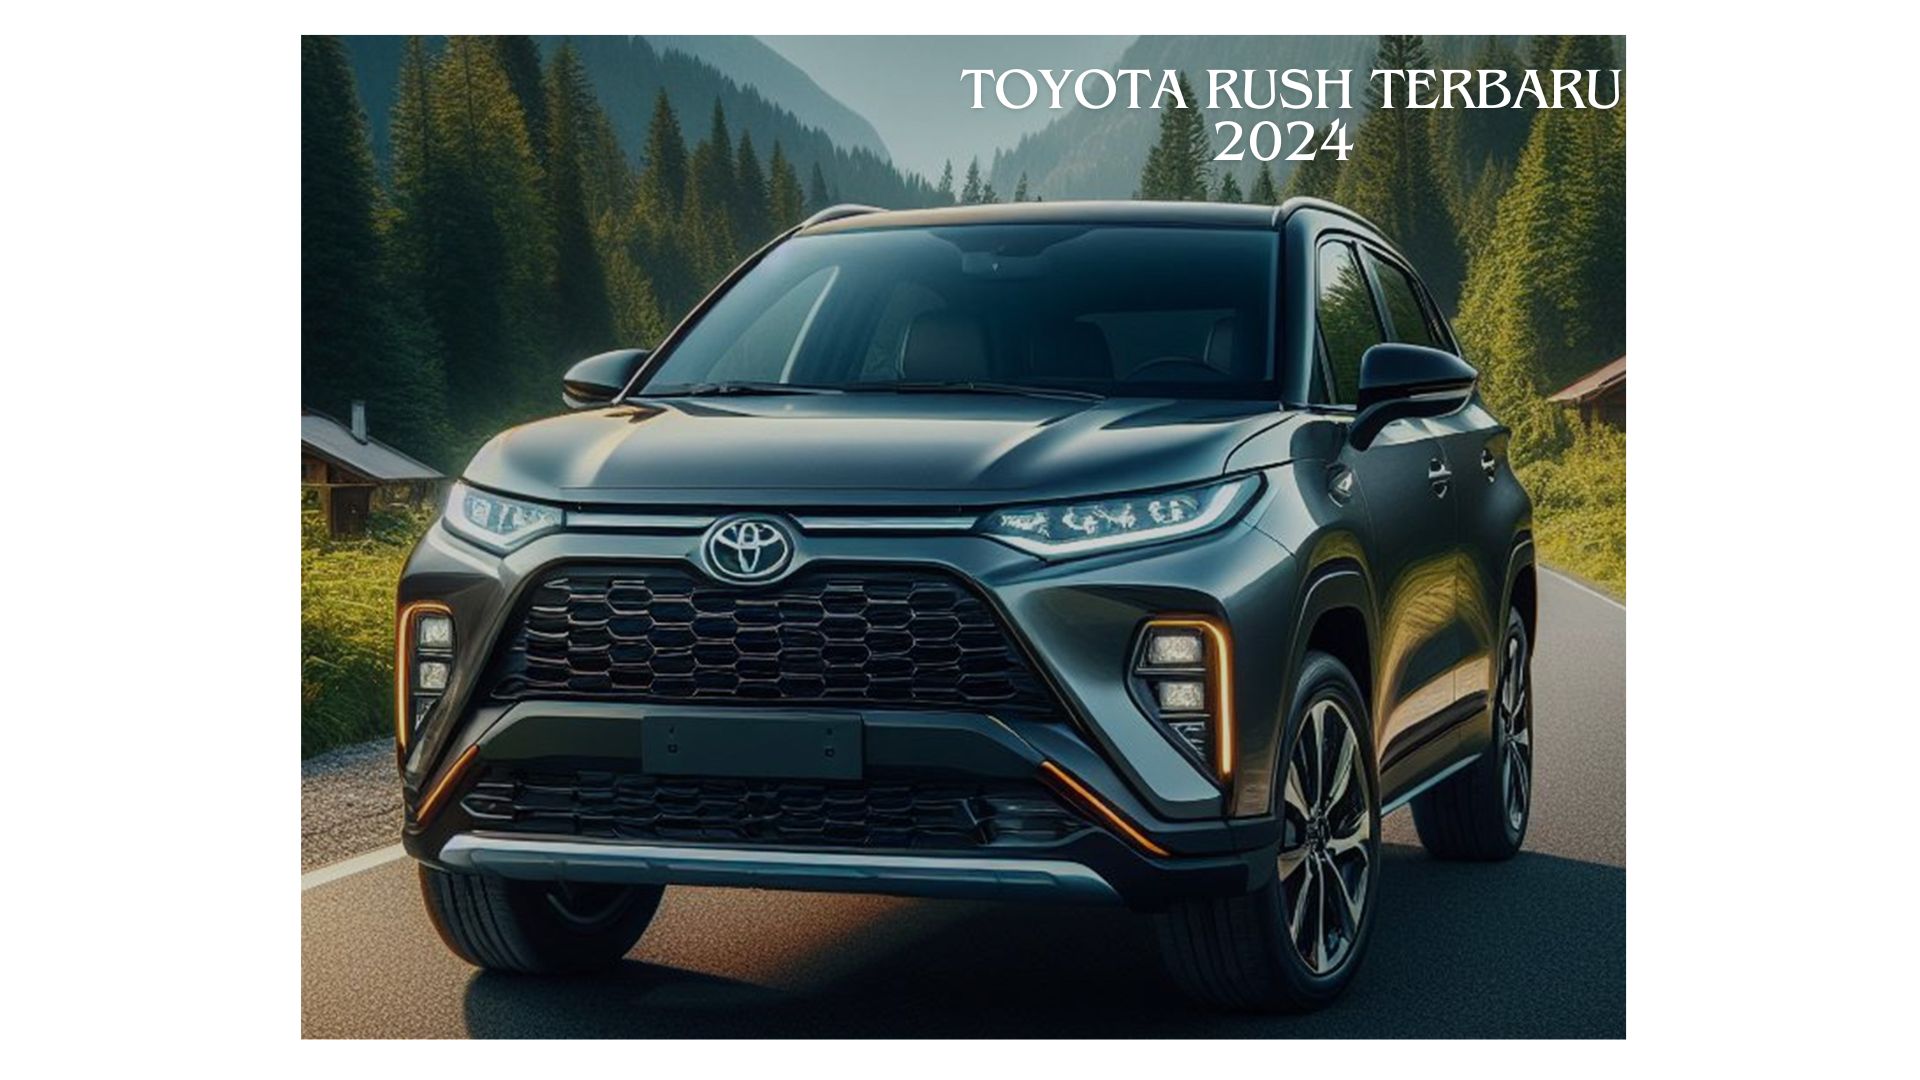 Muat untuk 7 Orang, Toyota Rush Terbaru 2024 Ternyata Punya Penampilan dan Keunggulan Ini